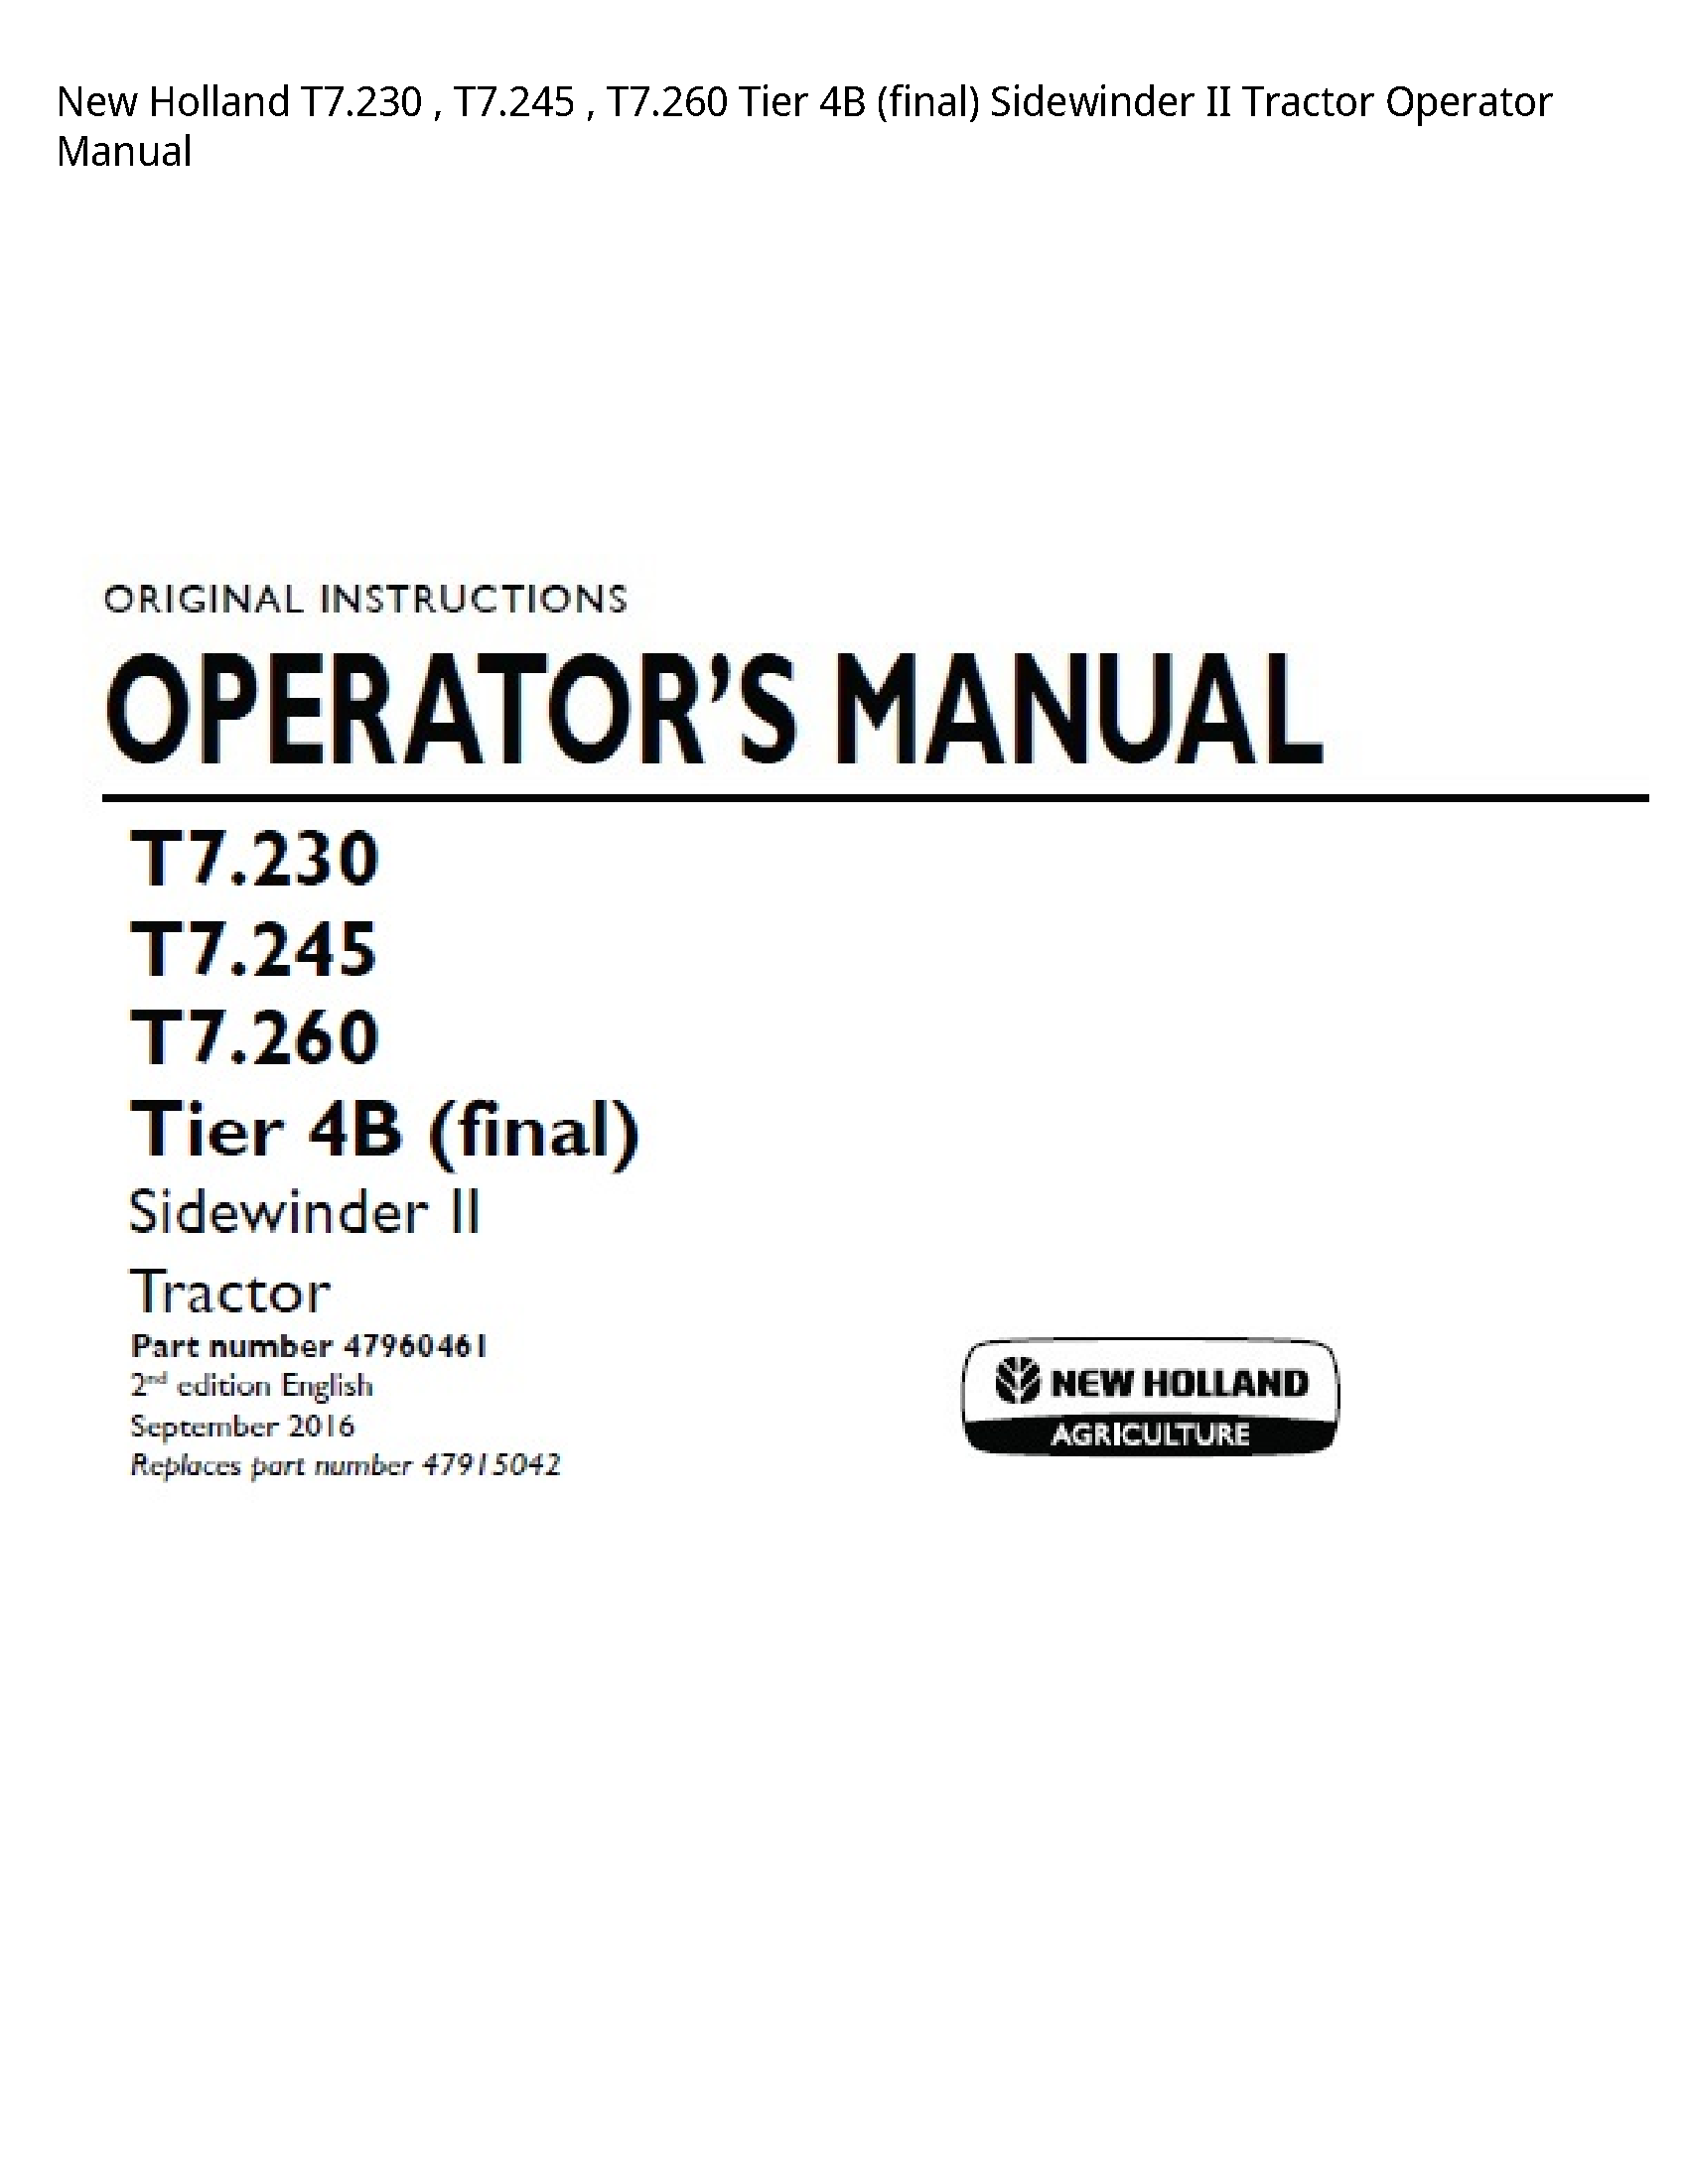 New Holland T7.230 Tier (final) Sidewinder II Tractor Operator manual